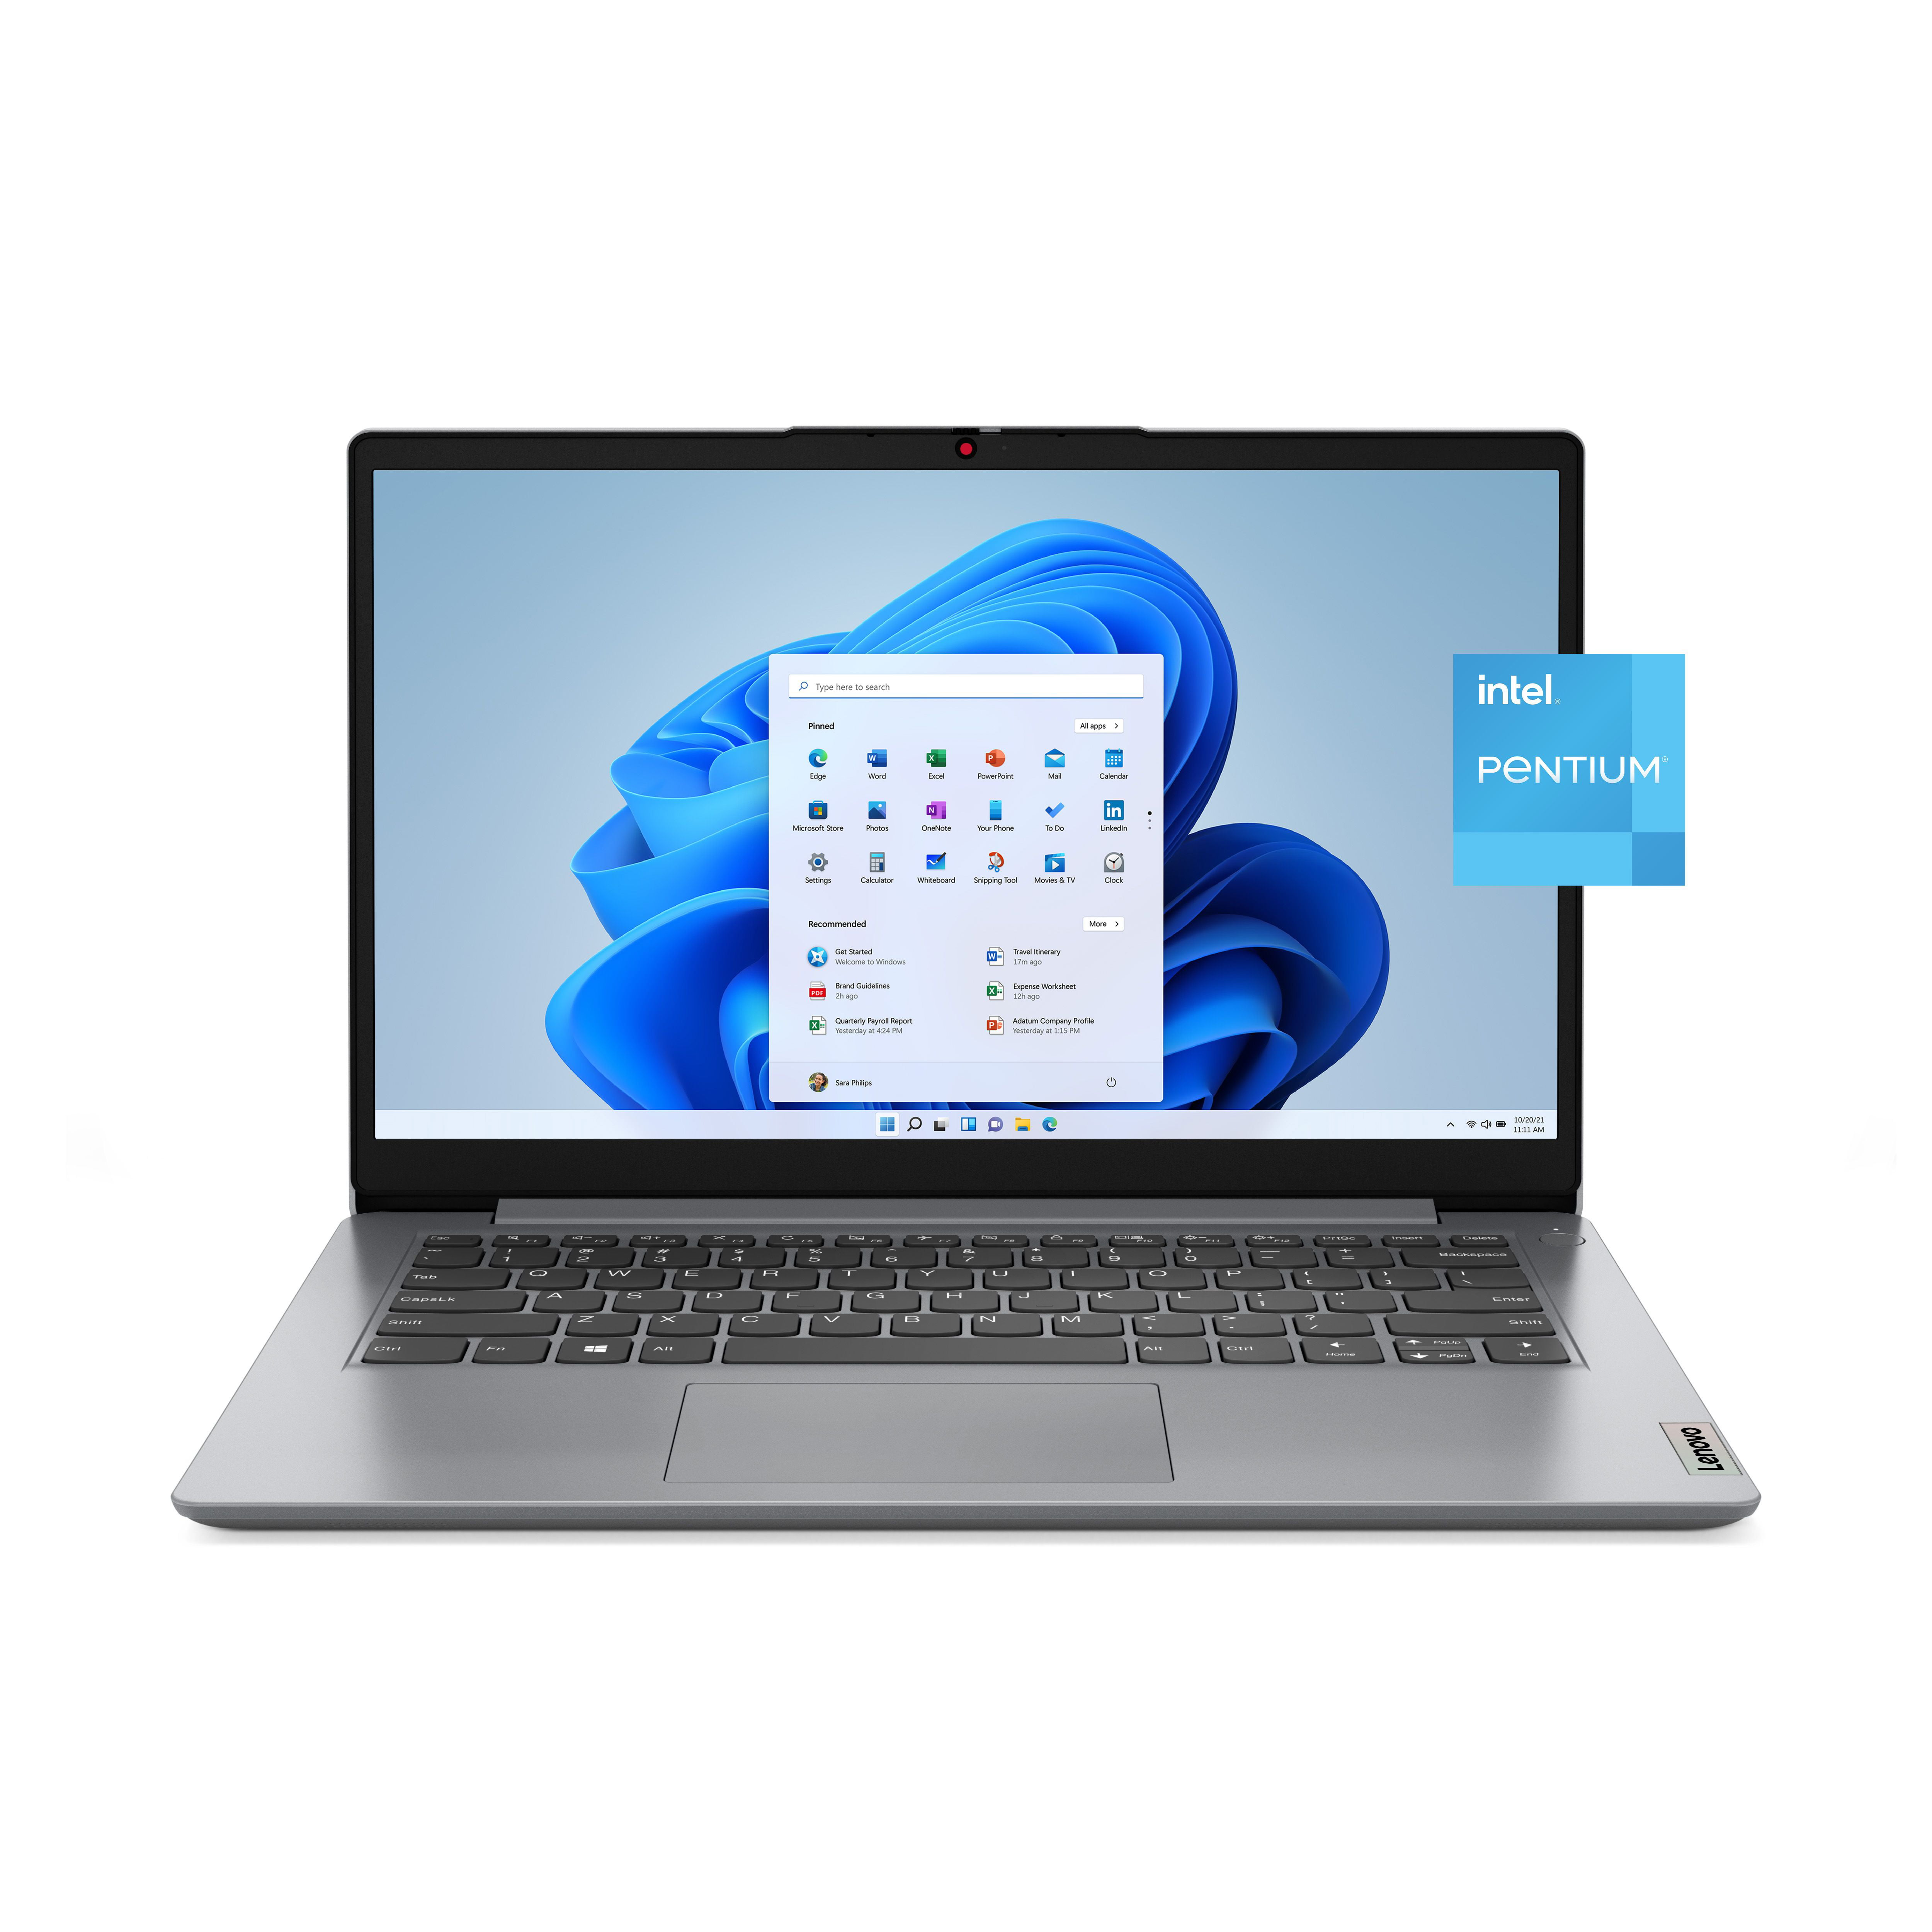 Lenovo IdeaPad 1i, 14.0" Laptop, Intel Pentium N5030, 4GB RAM, 128GB eMMC Storage, Cloud Grey, Windows 11 in S Mode, 82V6001DUS $129 at Walmart YMMV